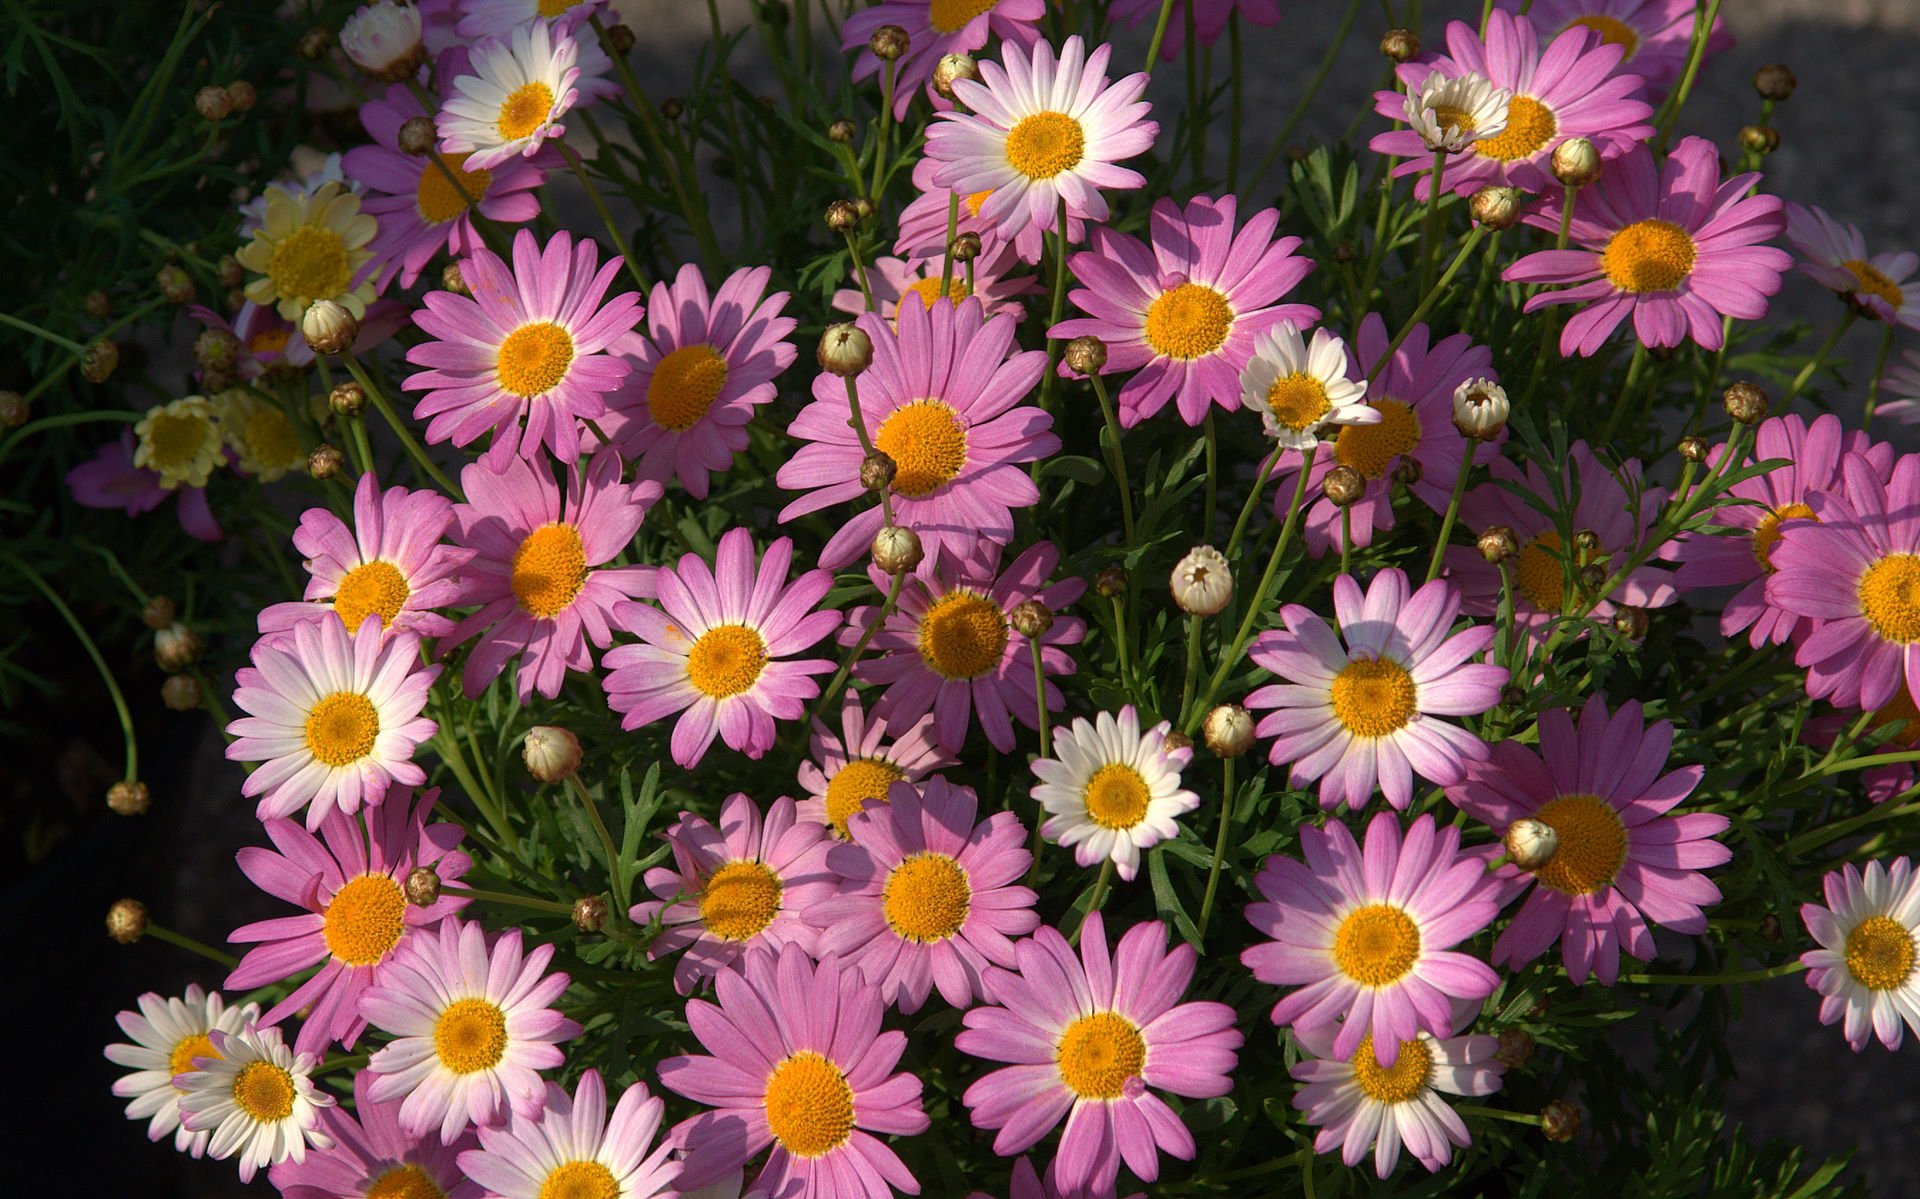 pink daisy hd wallpaper for your desktop background or desktop